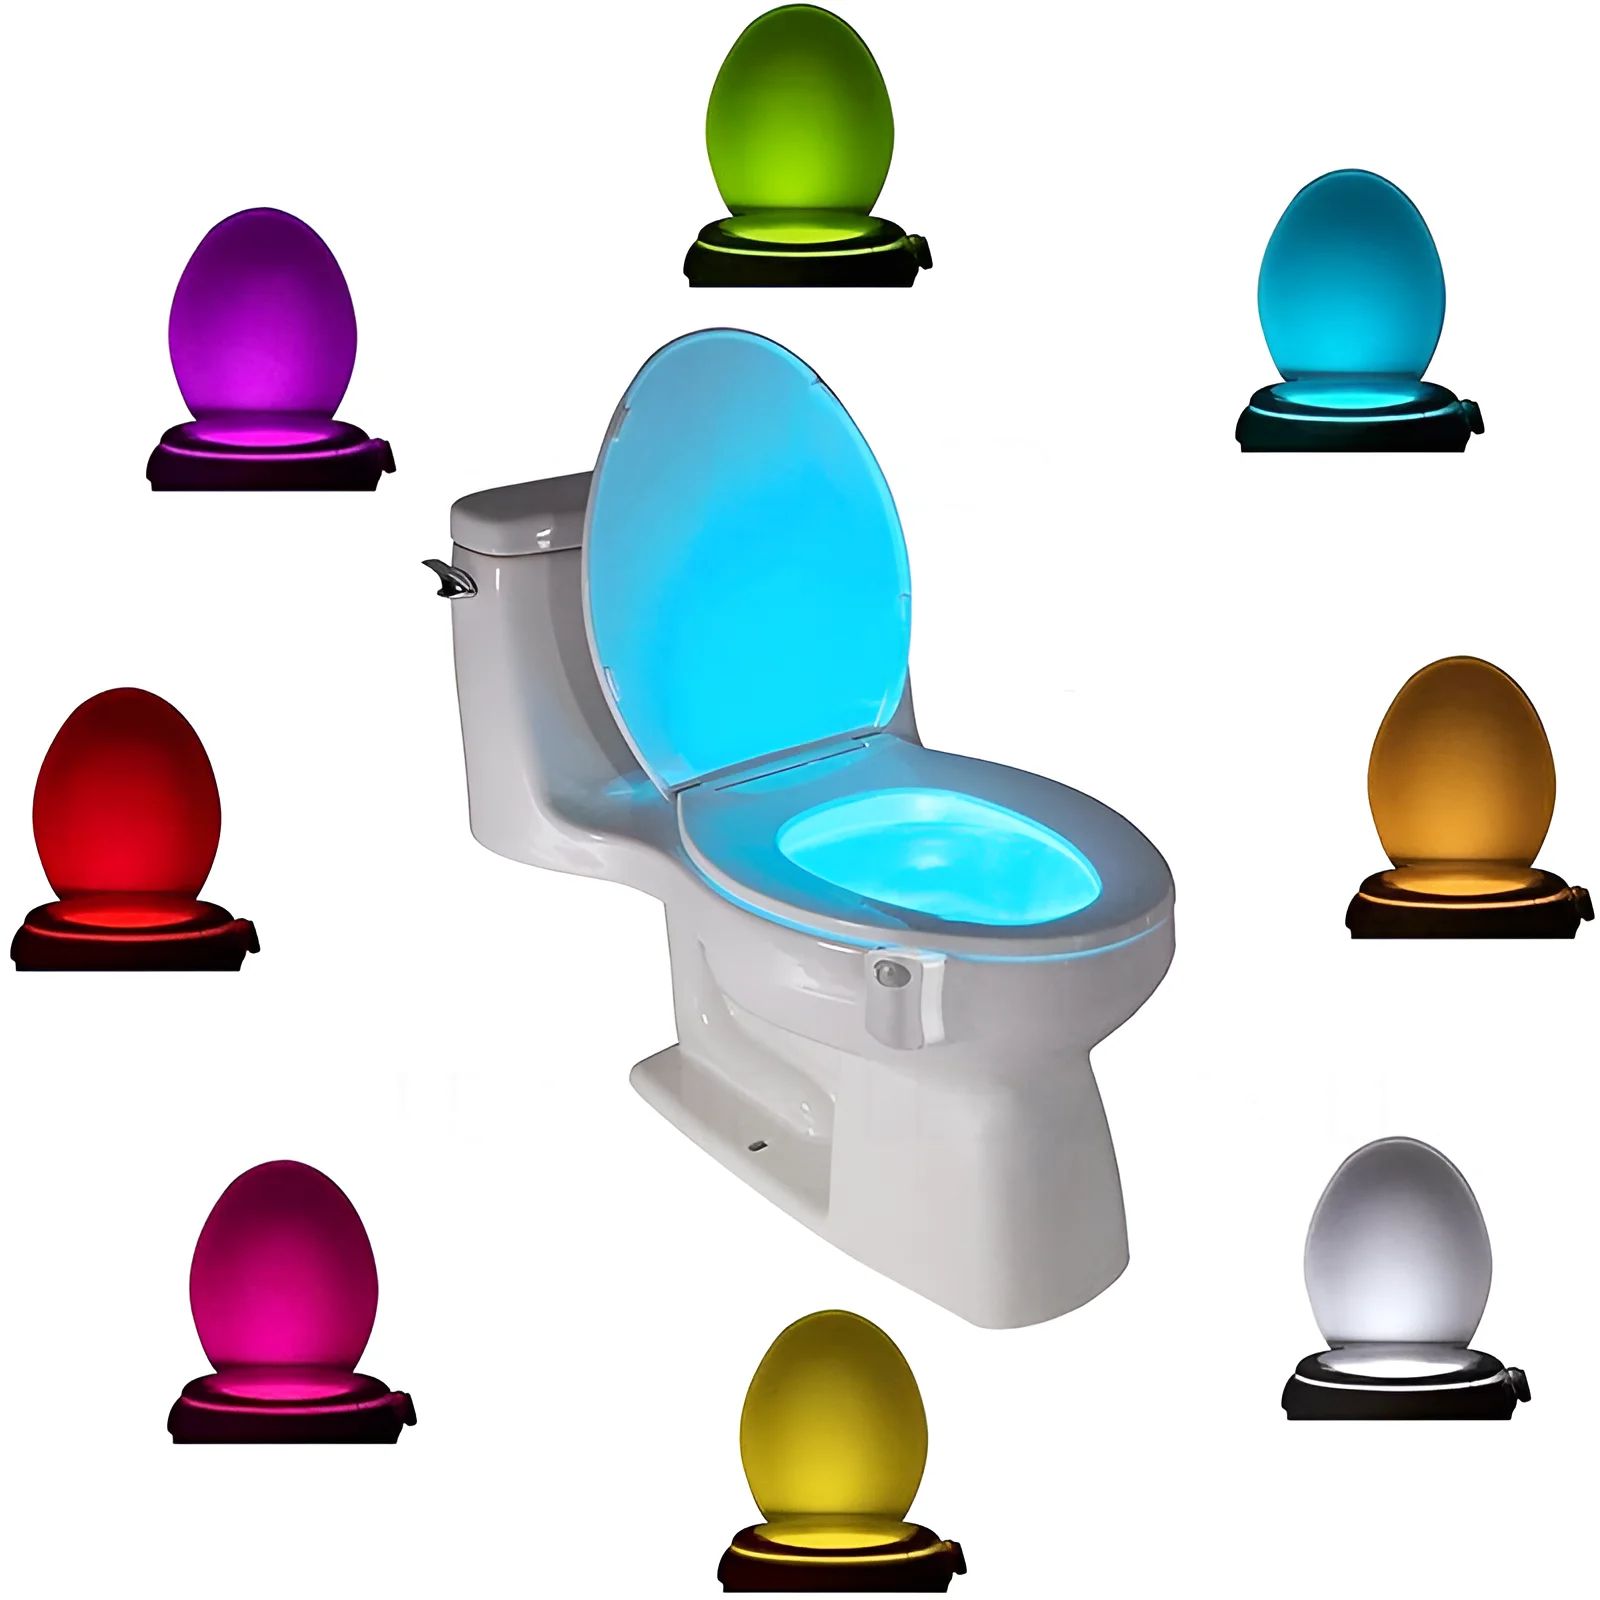 https://ae01.alicdn.com/kf/S62493860232441e8a4b4e41b6ab65aa2N/16-Colors-Toilet-Night-Light-PIR-Motion-Sensor-Toilet-Lights-LED-Washroom-Night-Lamp-Toilet-Bowl.png